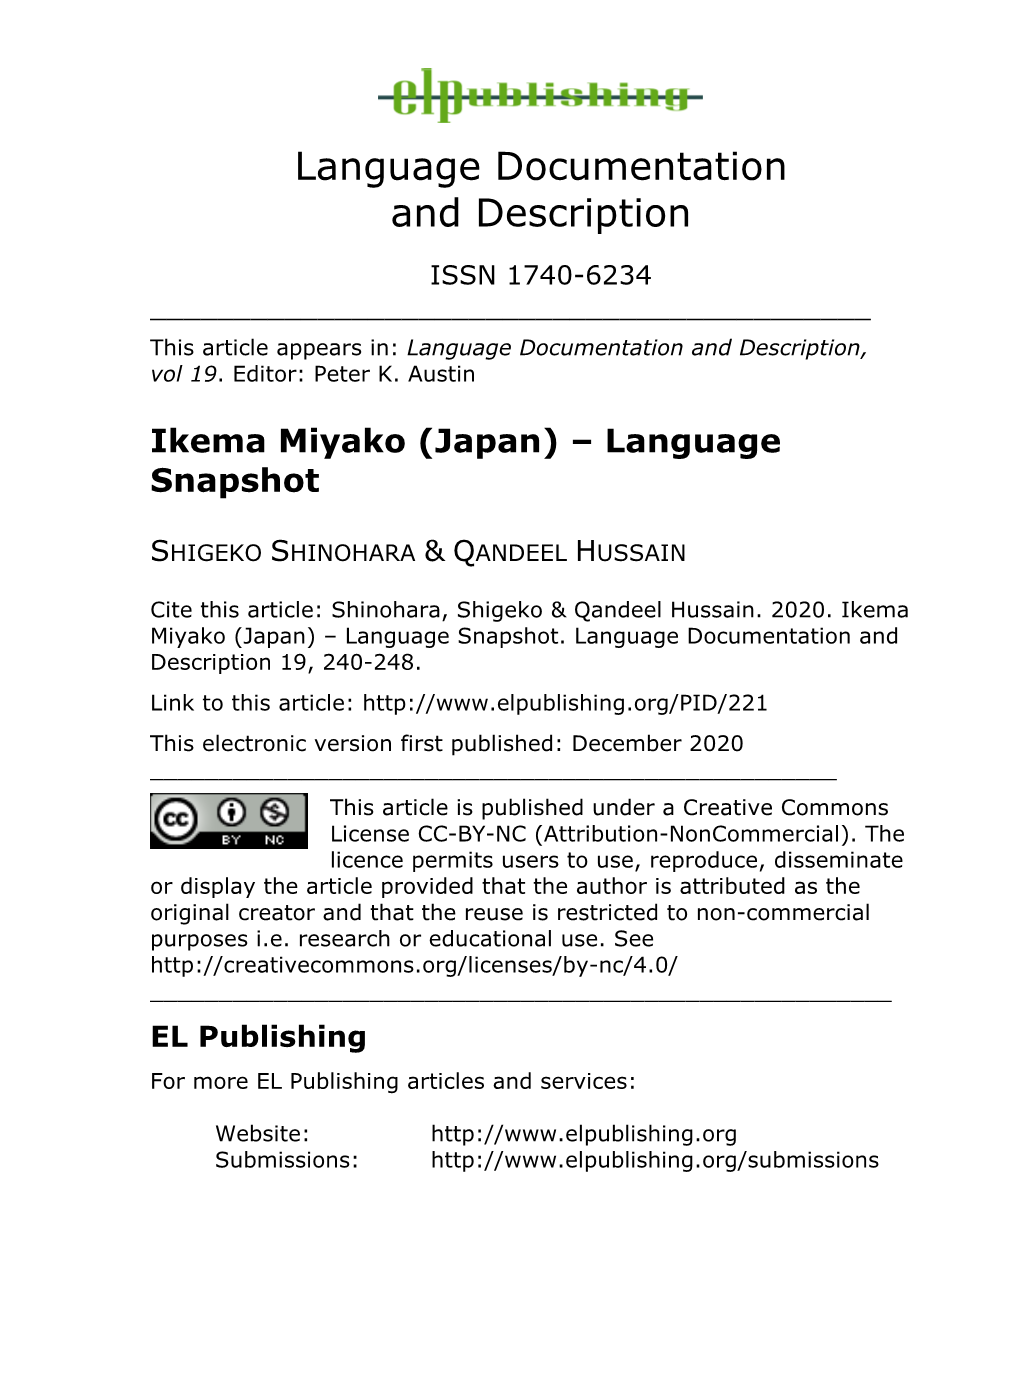 Ikema Miyako (Japan) – Language Snapshot